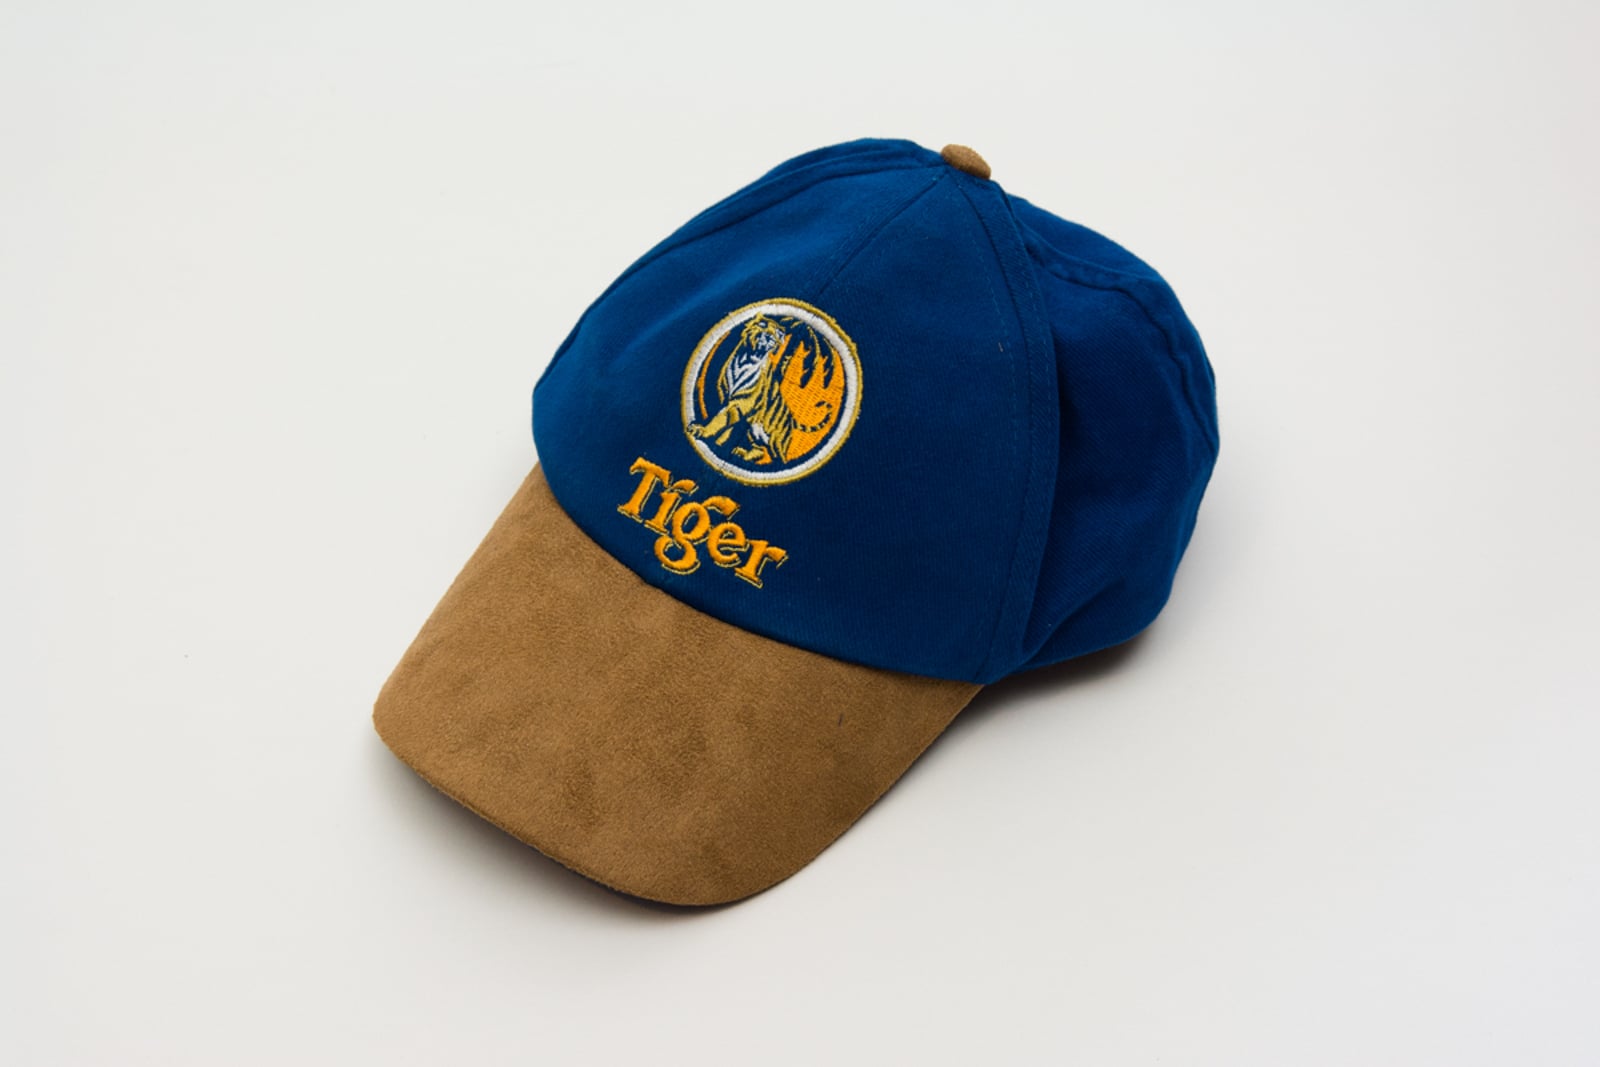 Tiger Beer Blue Cap